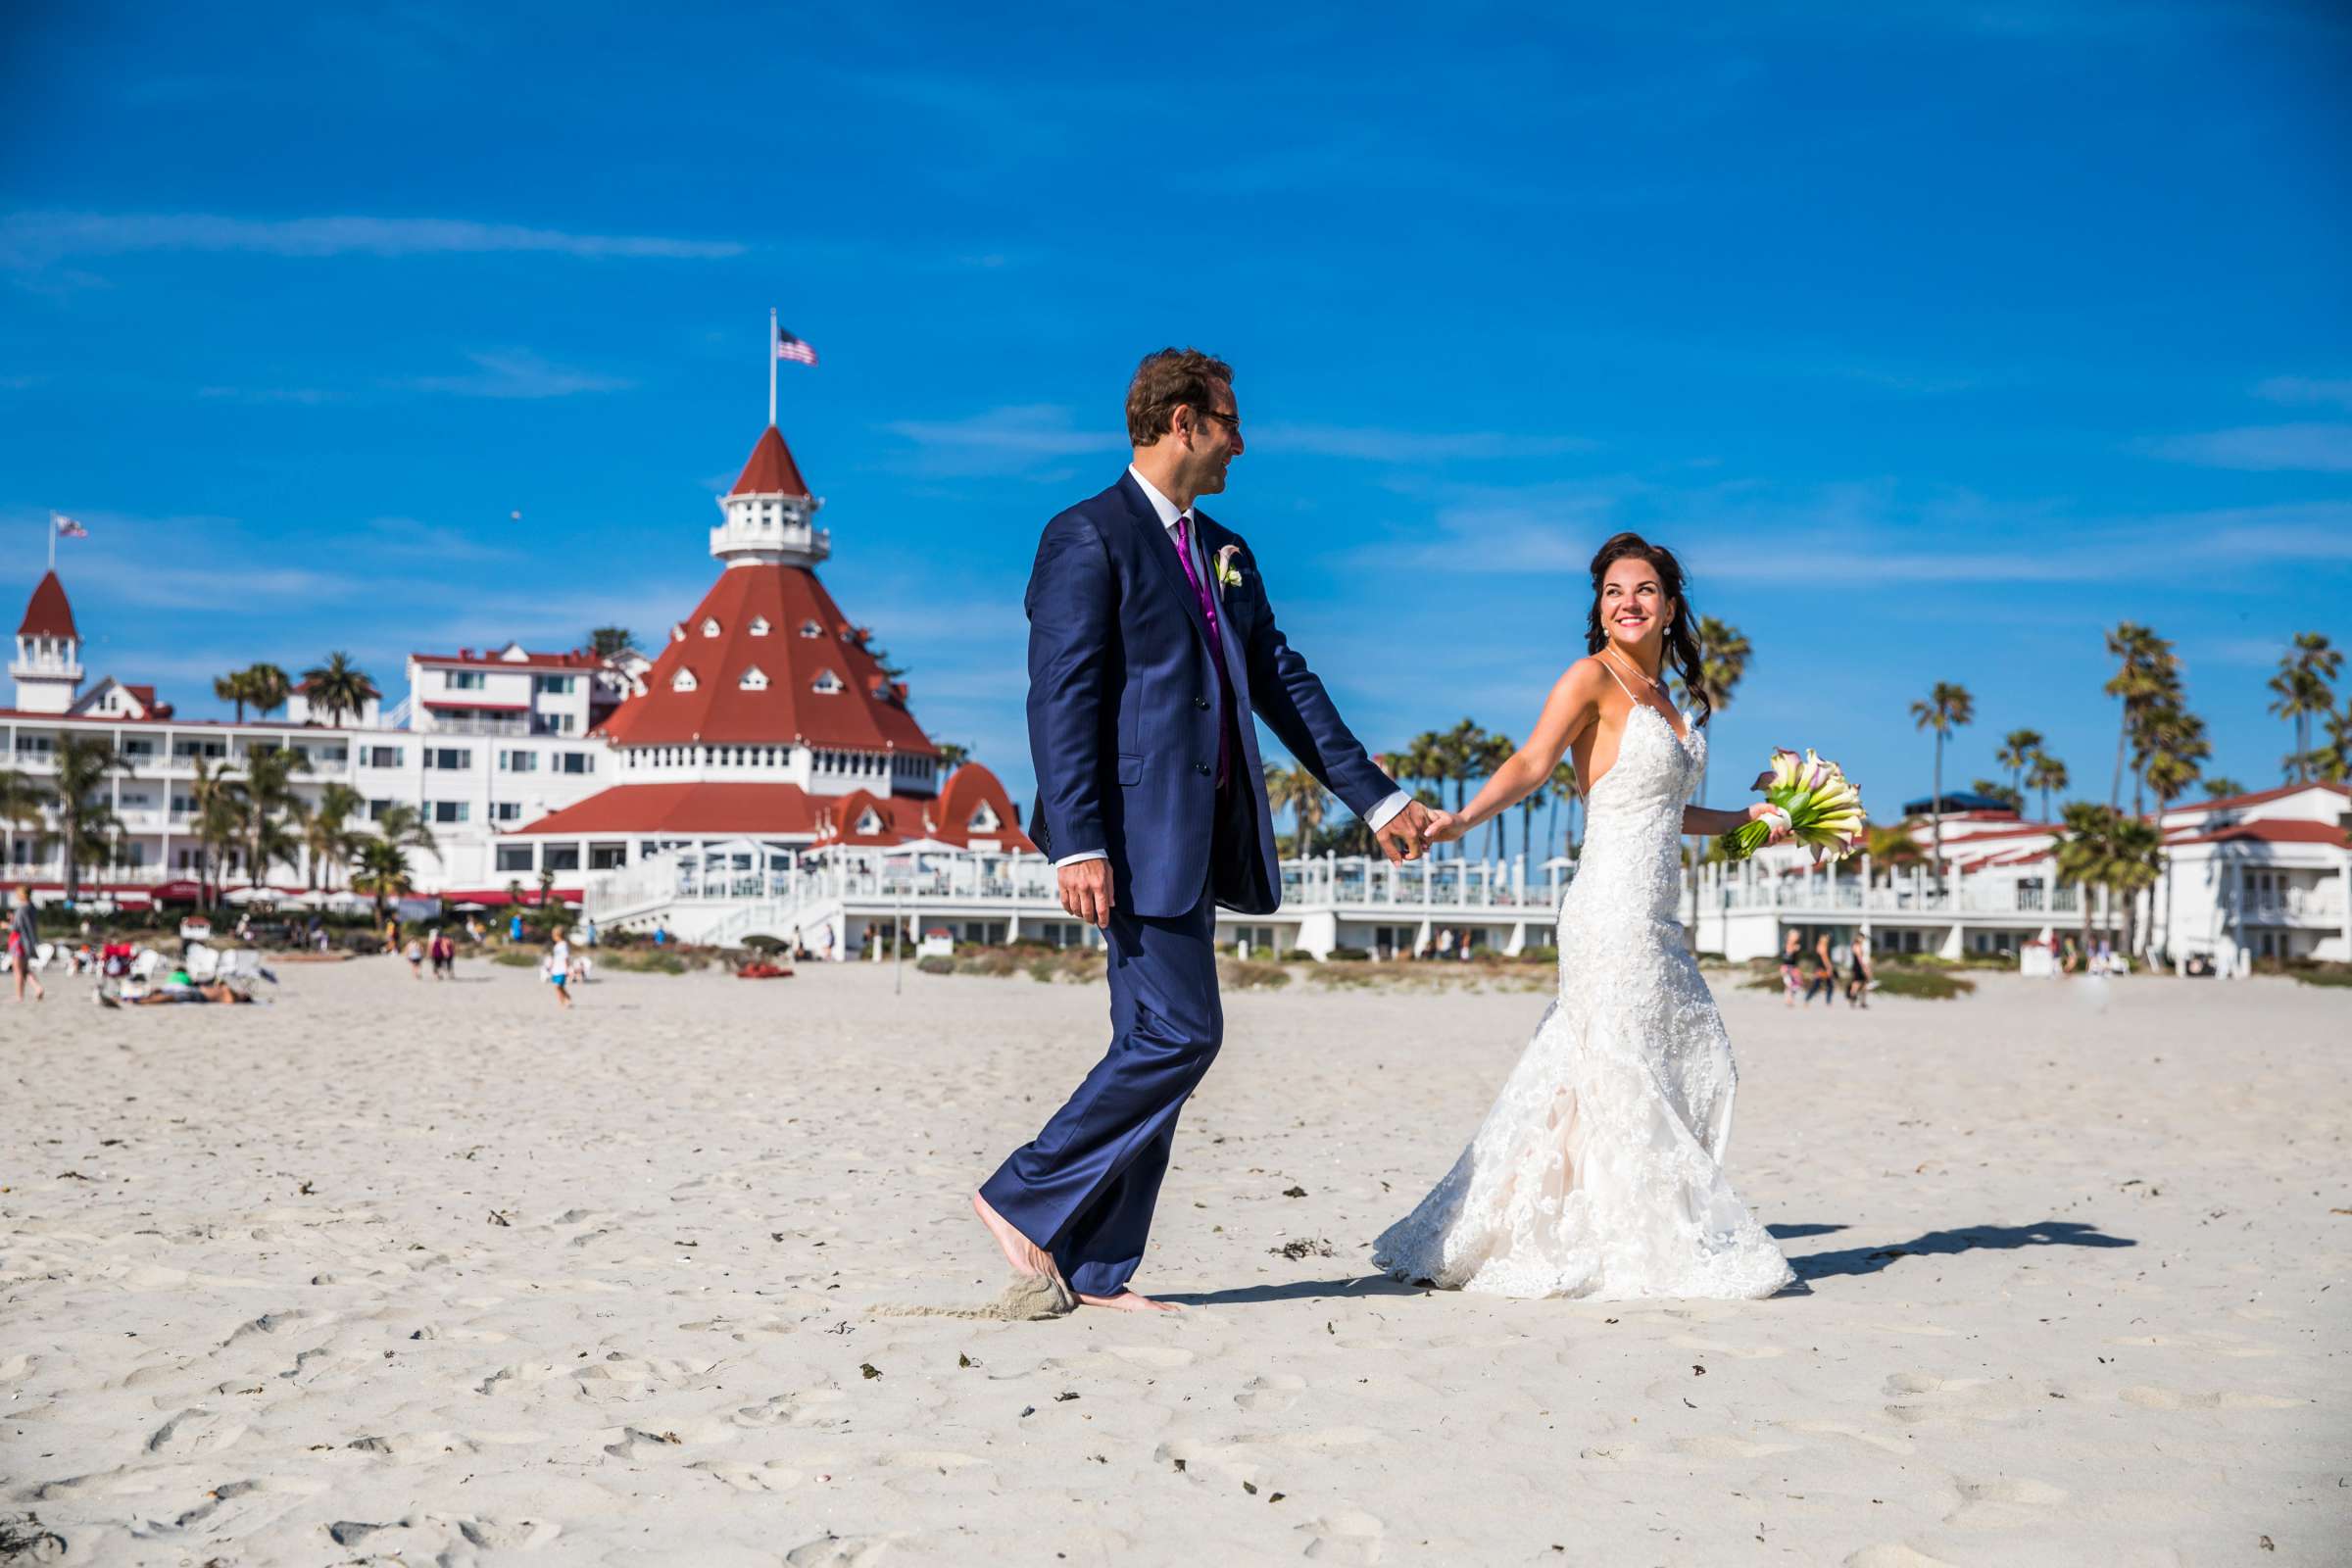 Hotel Del Coronado Wedding, Jessica and Todd Wedding Photo #8 by True Photography